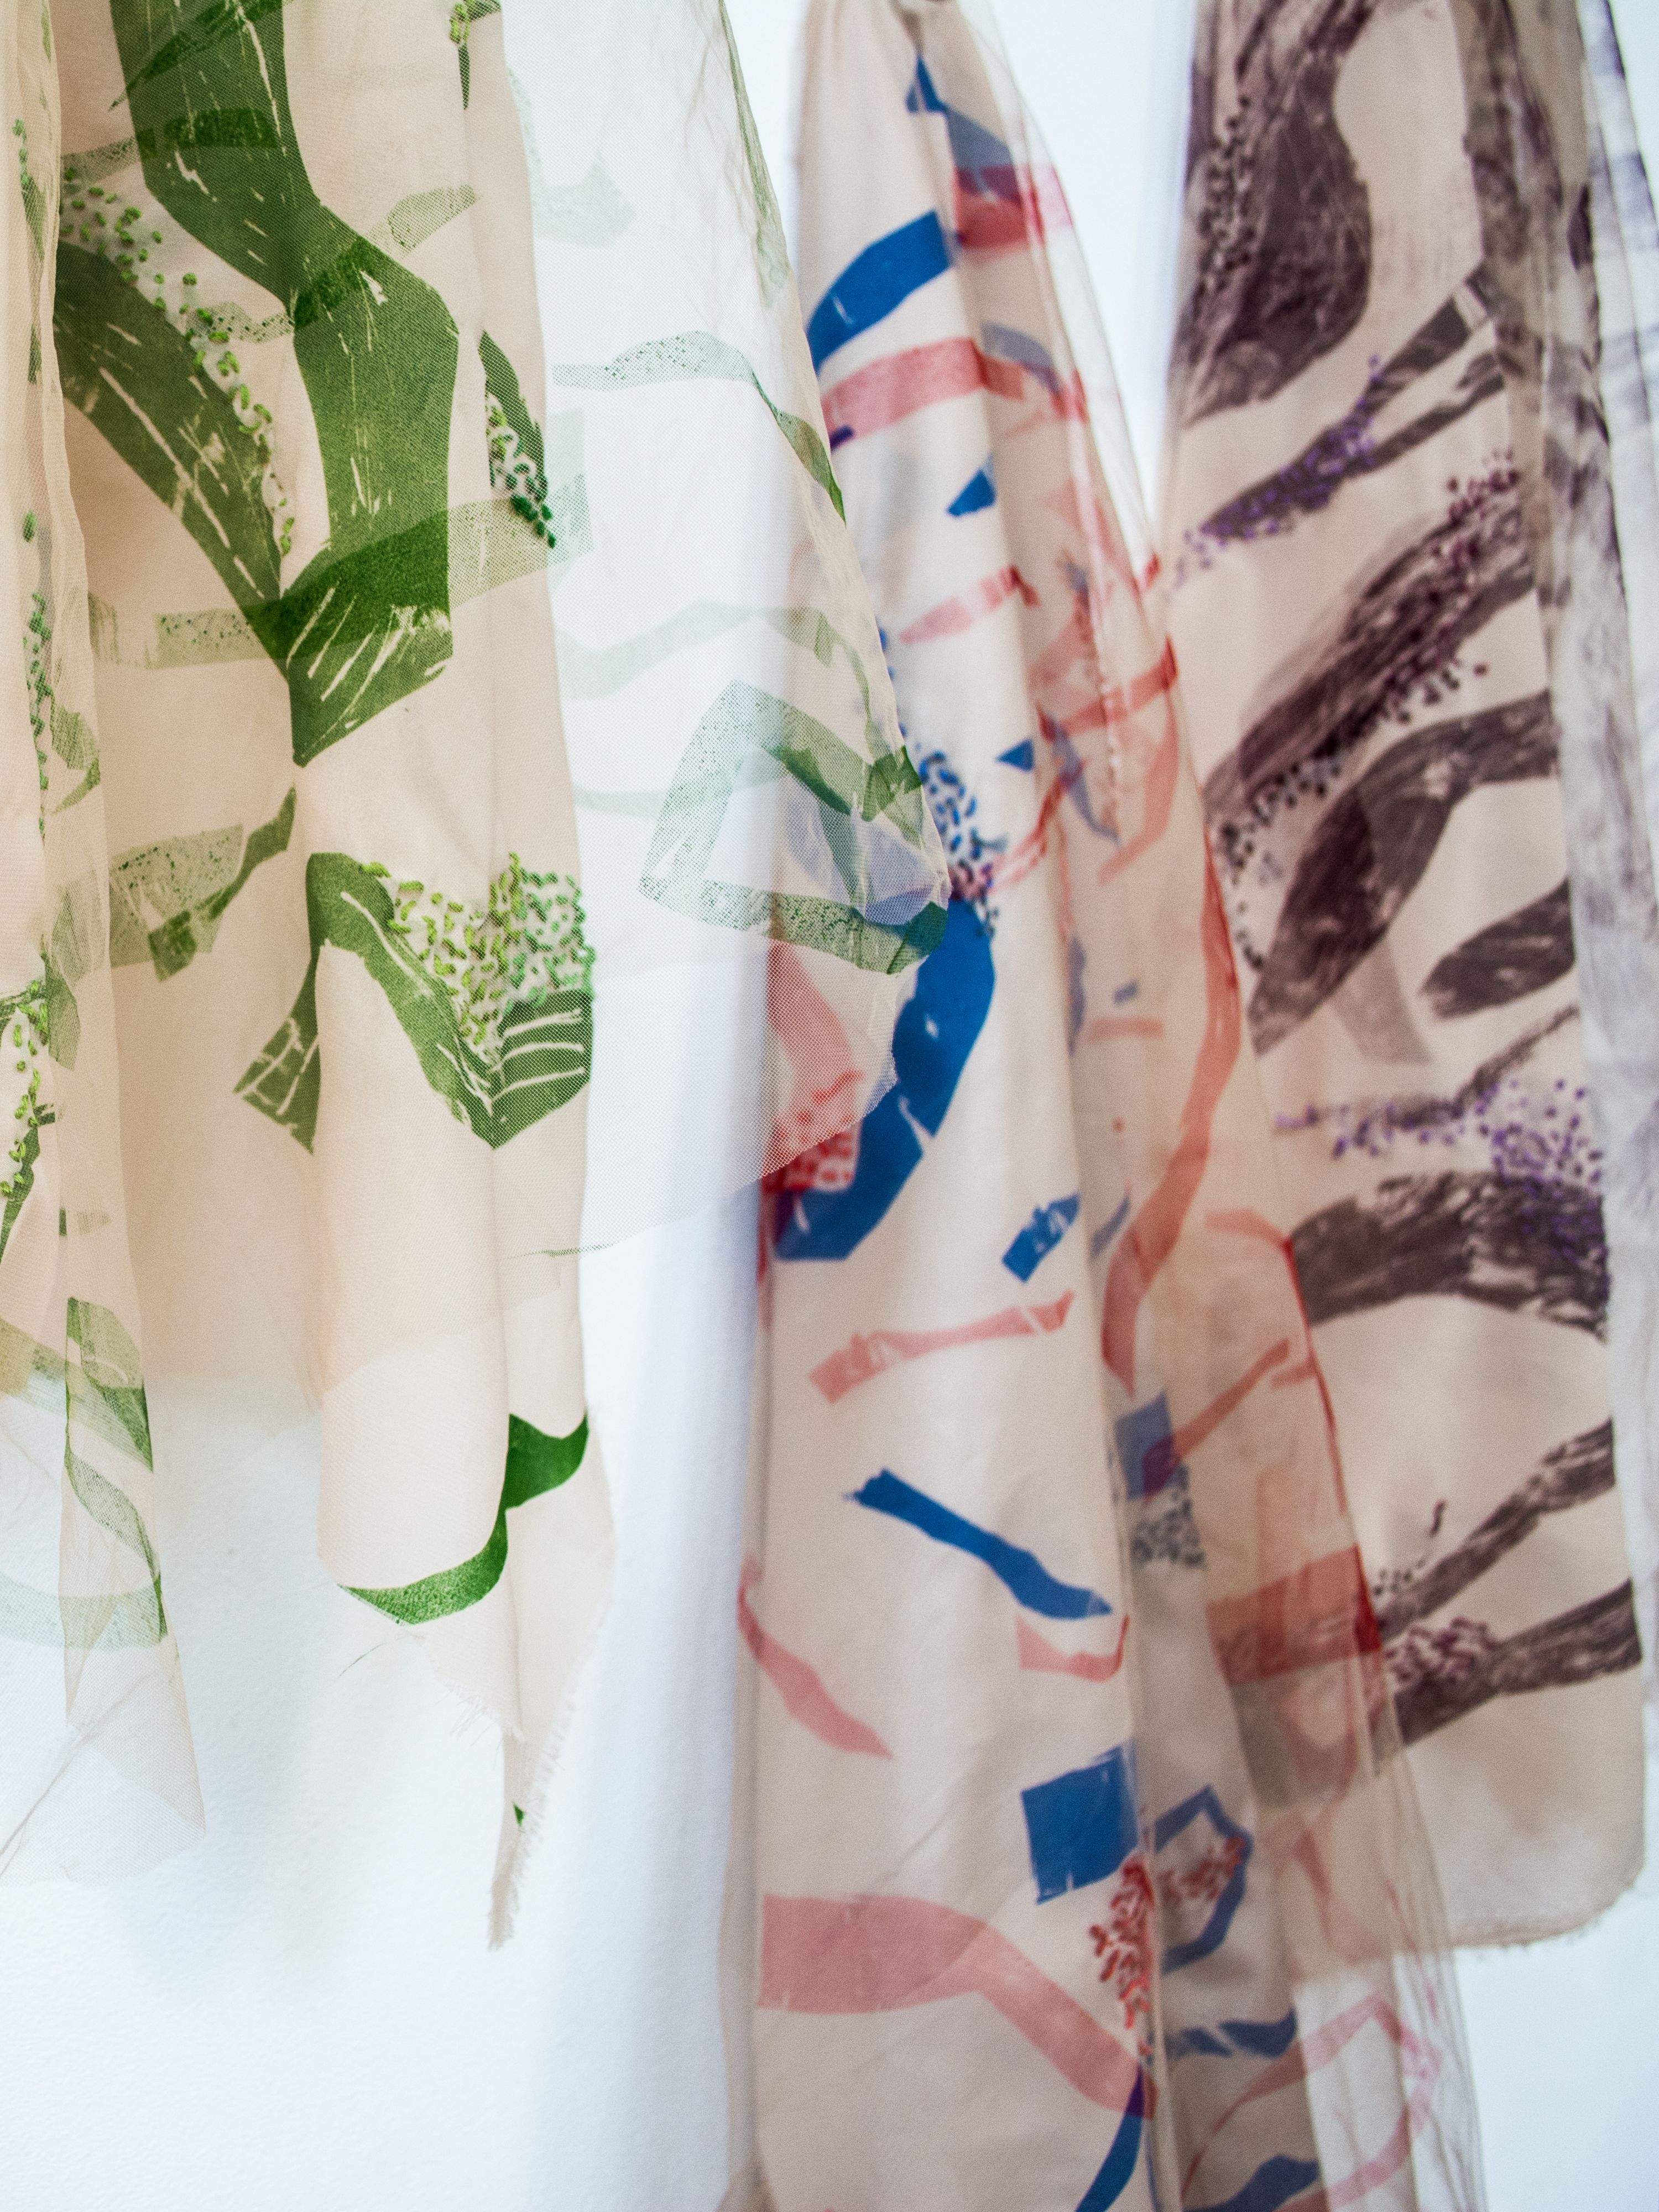 Hanging patterned fabrics